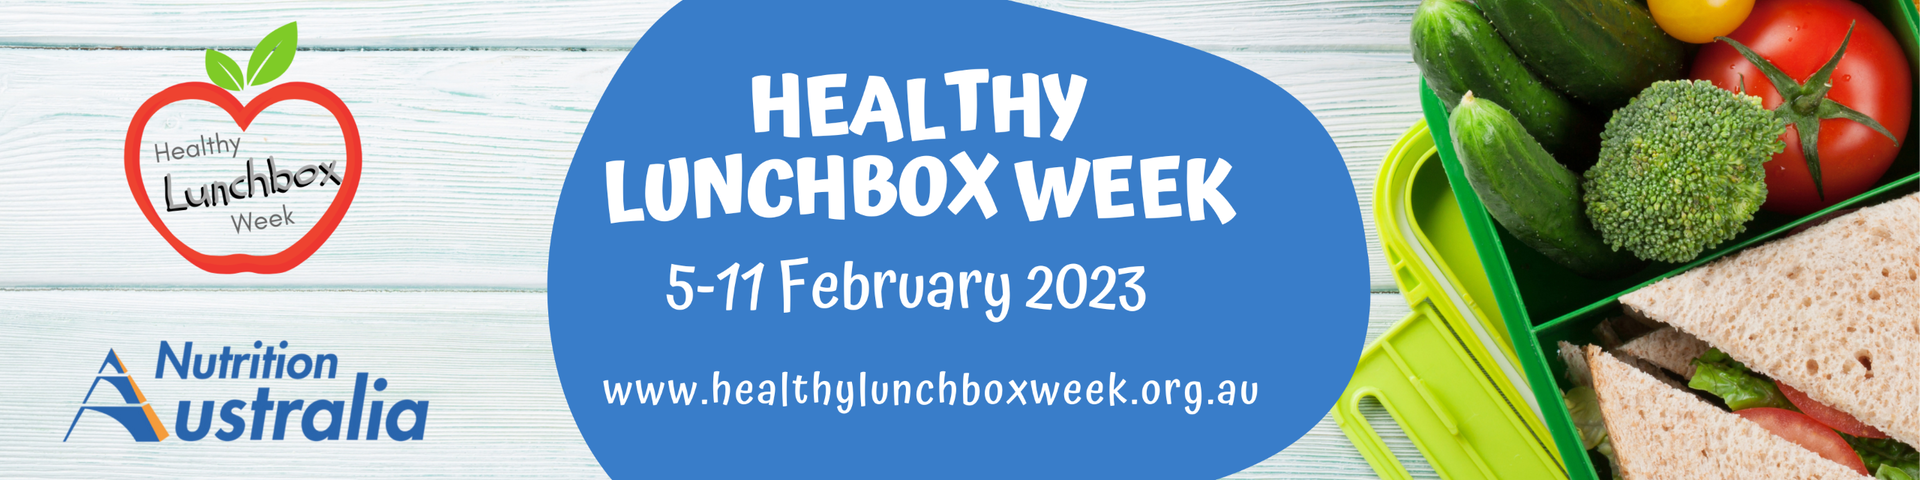 Healthy Lunchbox Week